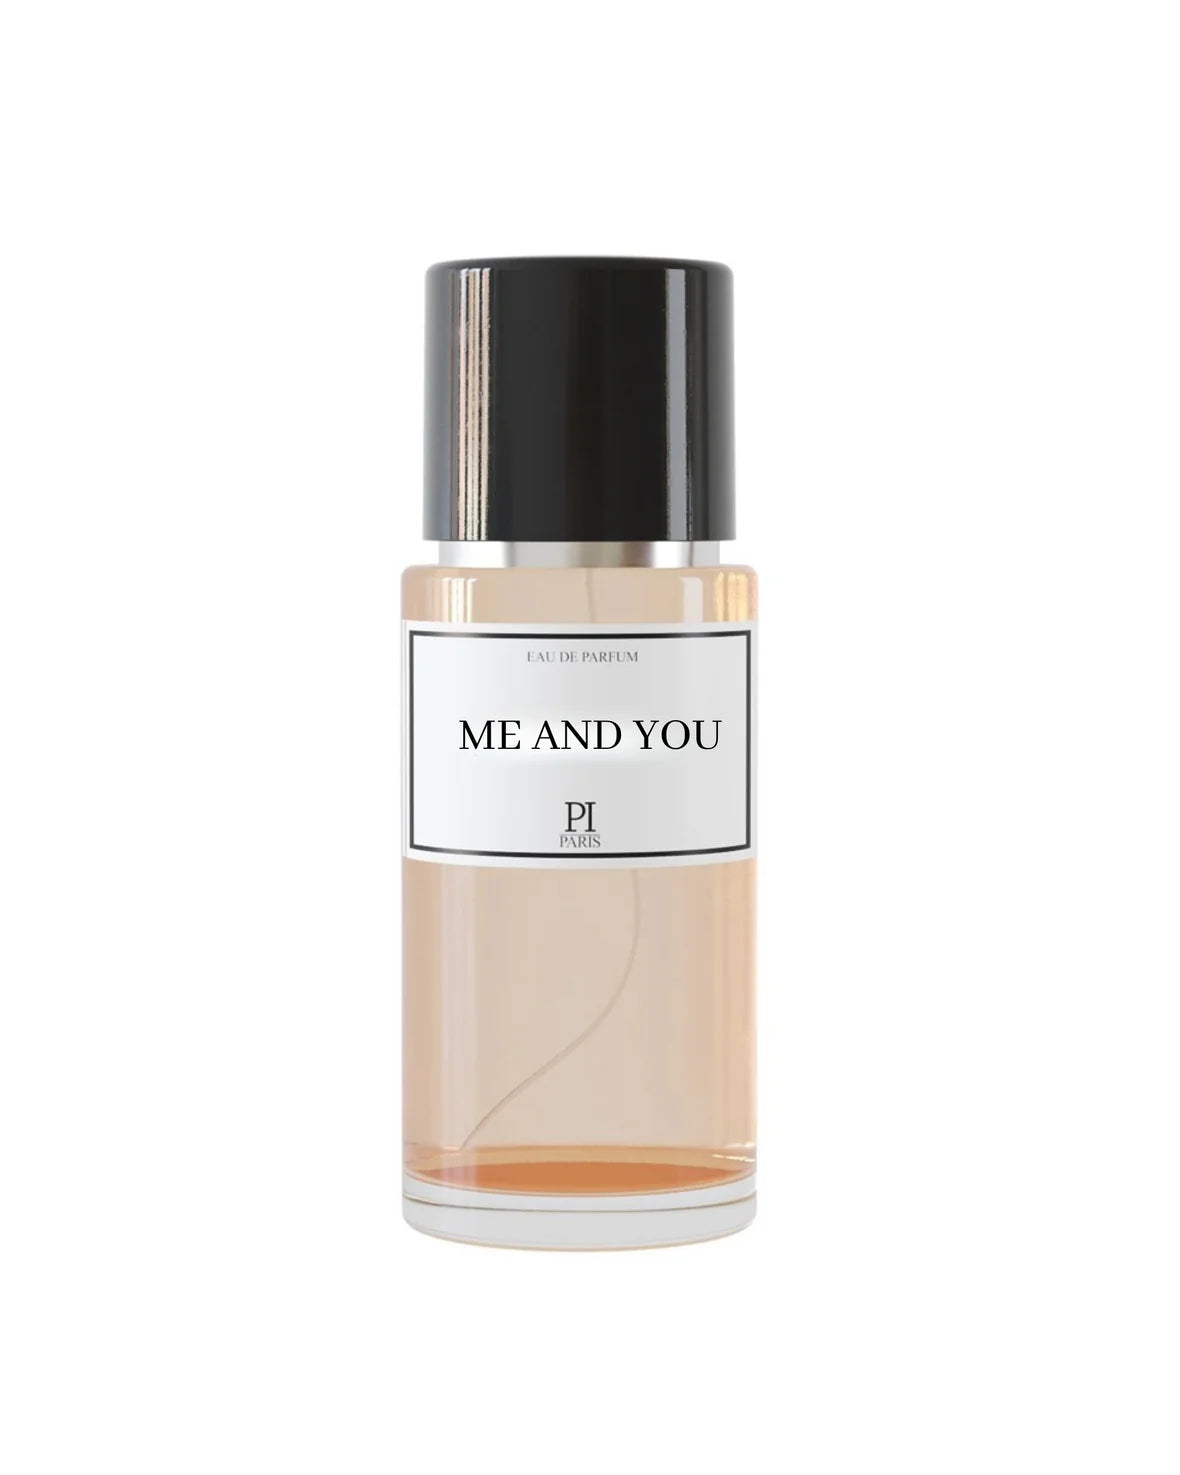 Me and you eau de parfum